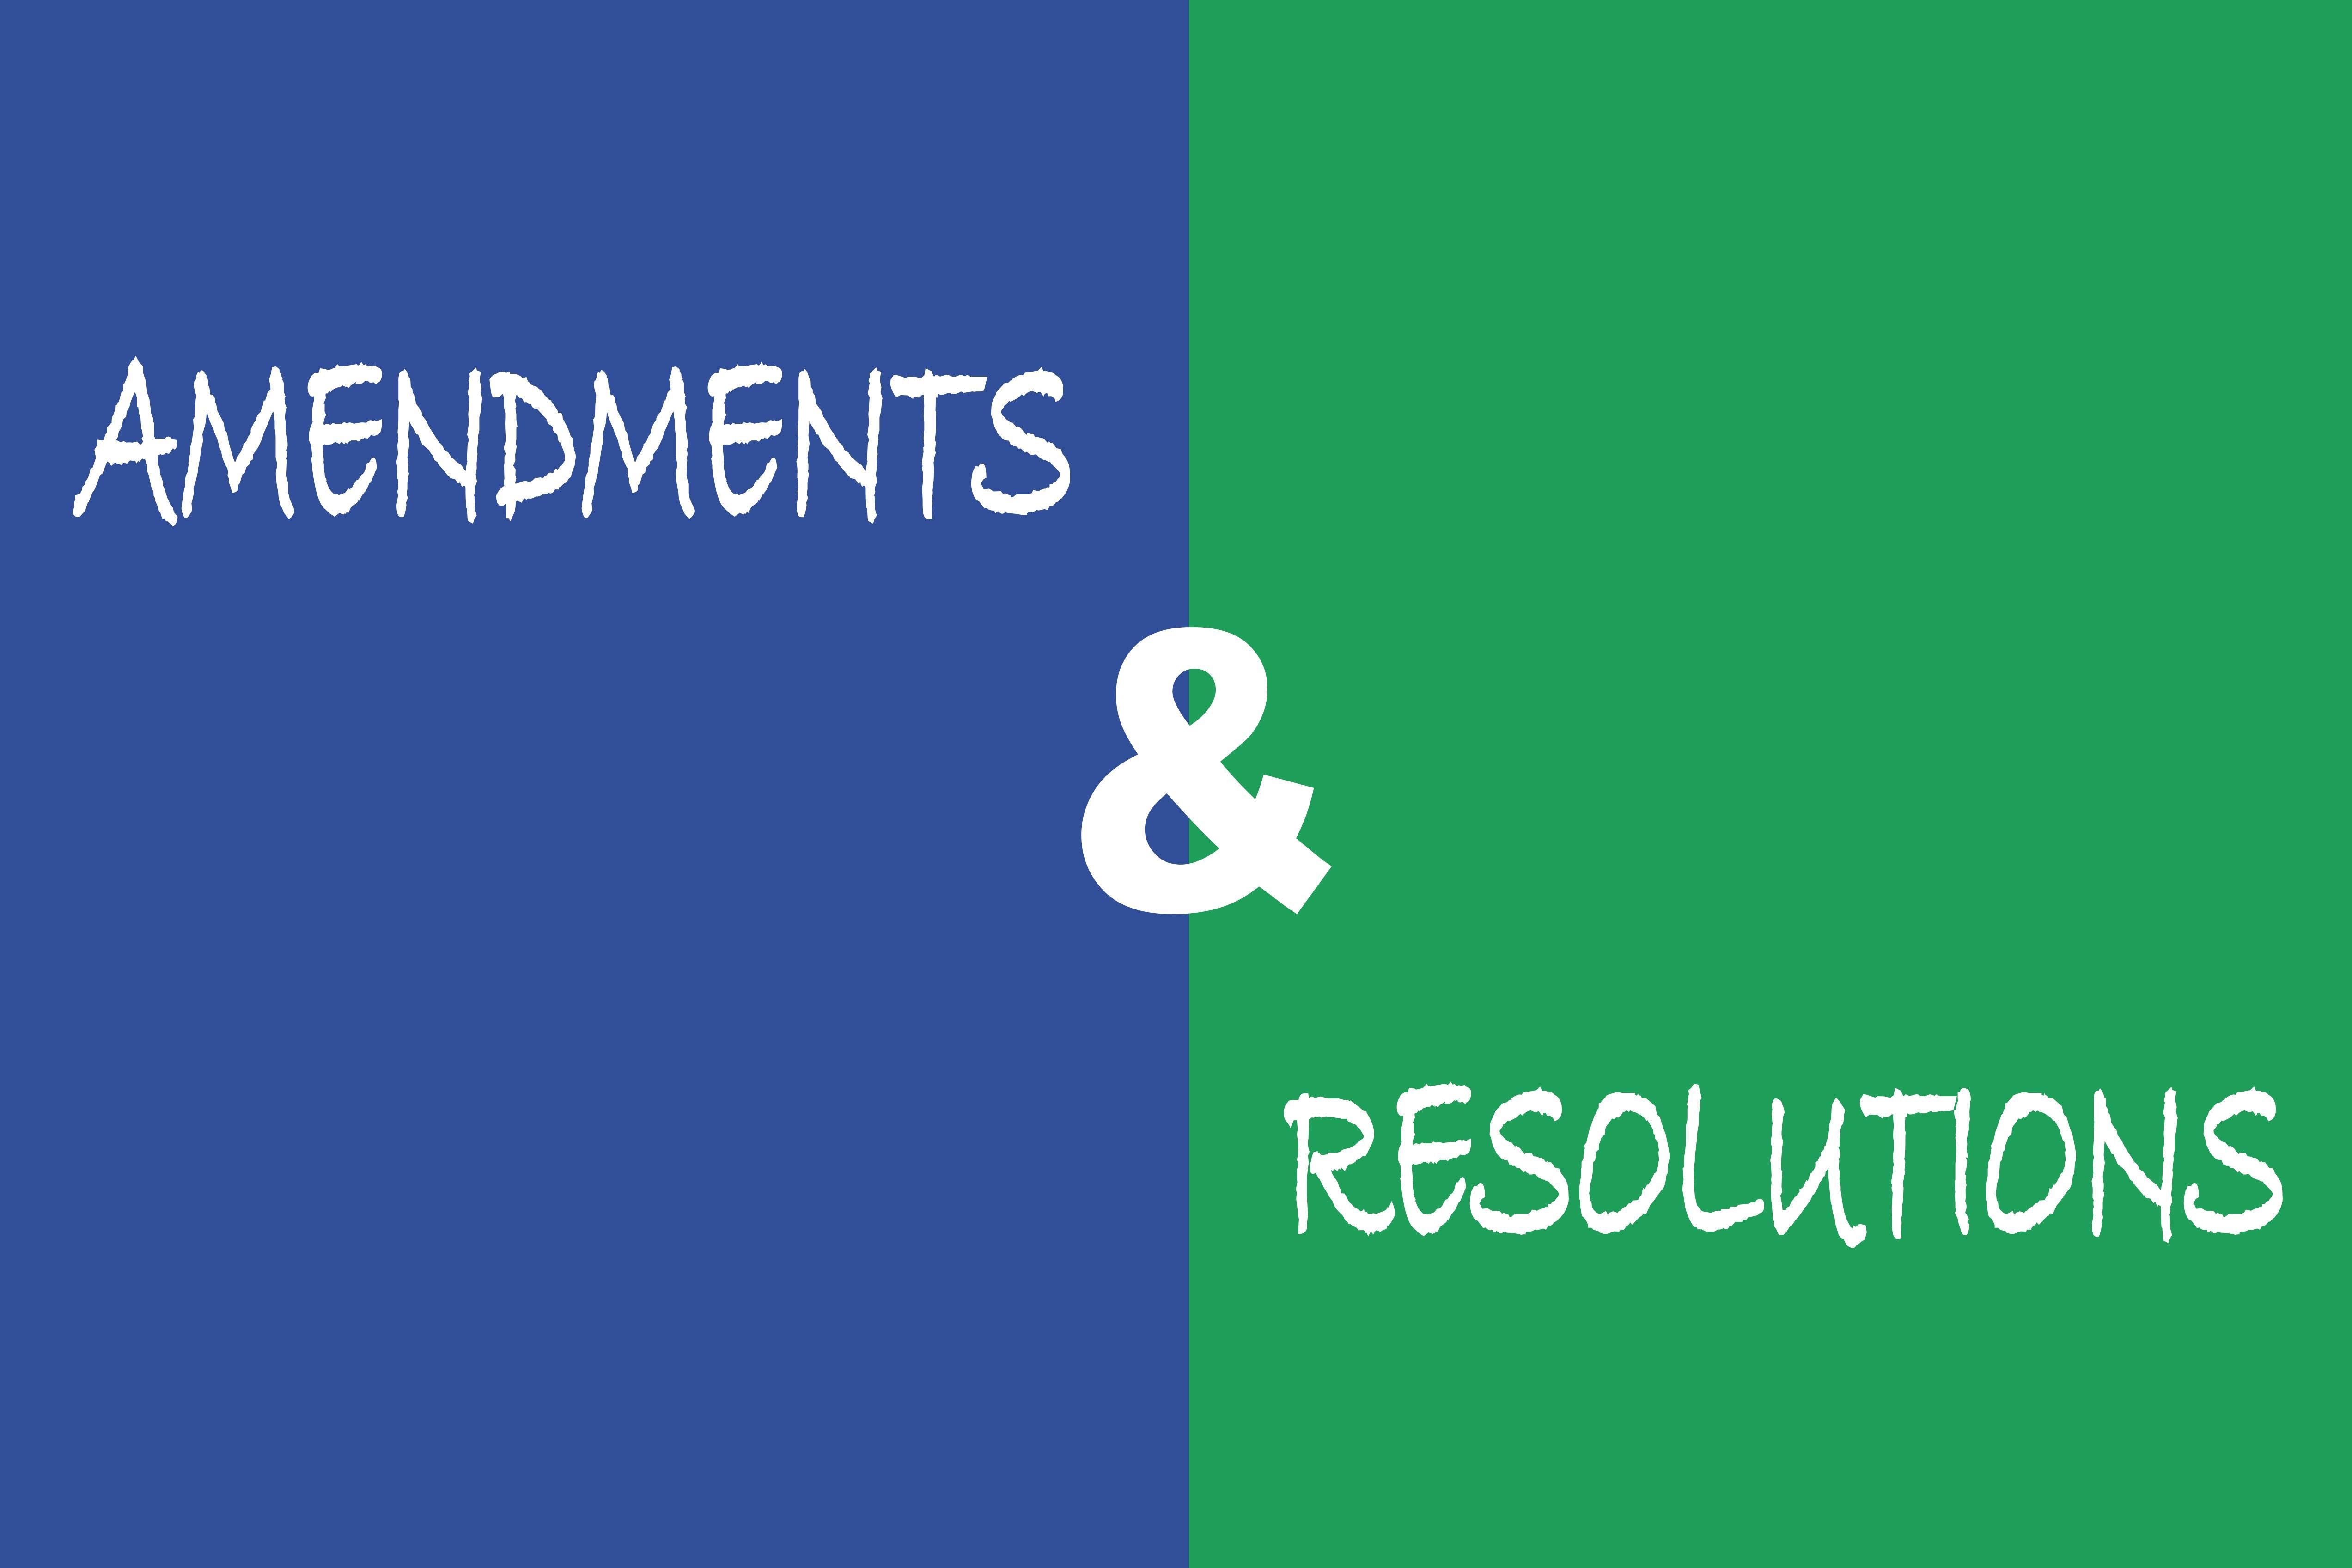 Amendments and resolutions